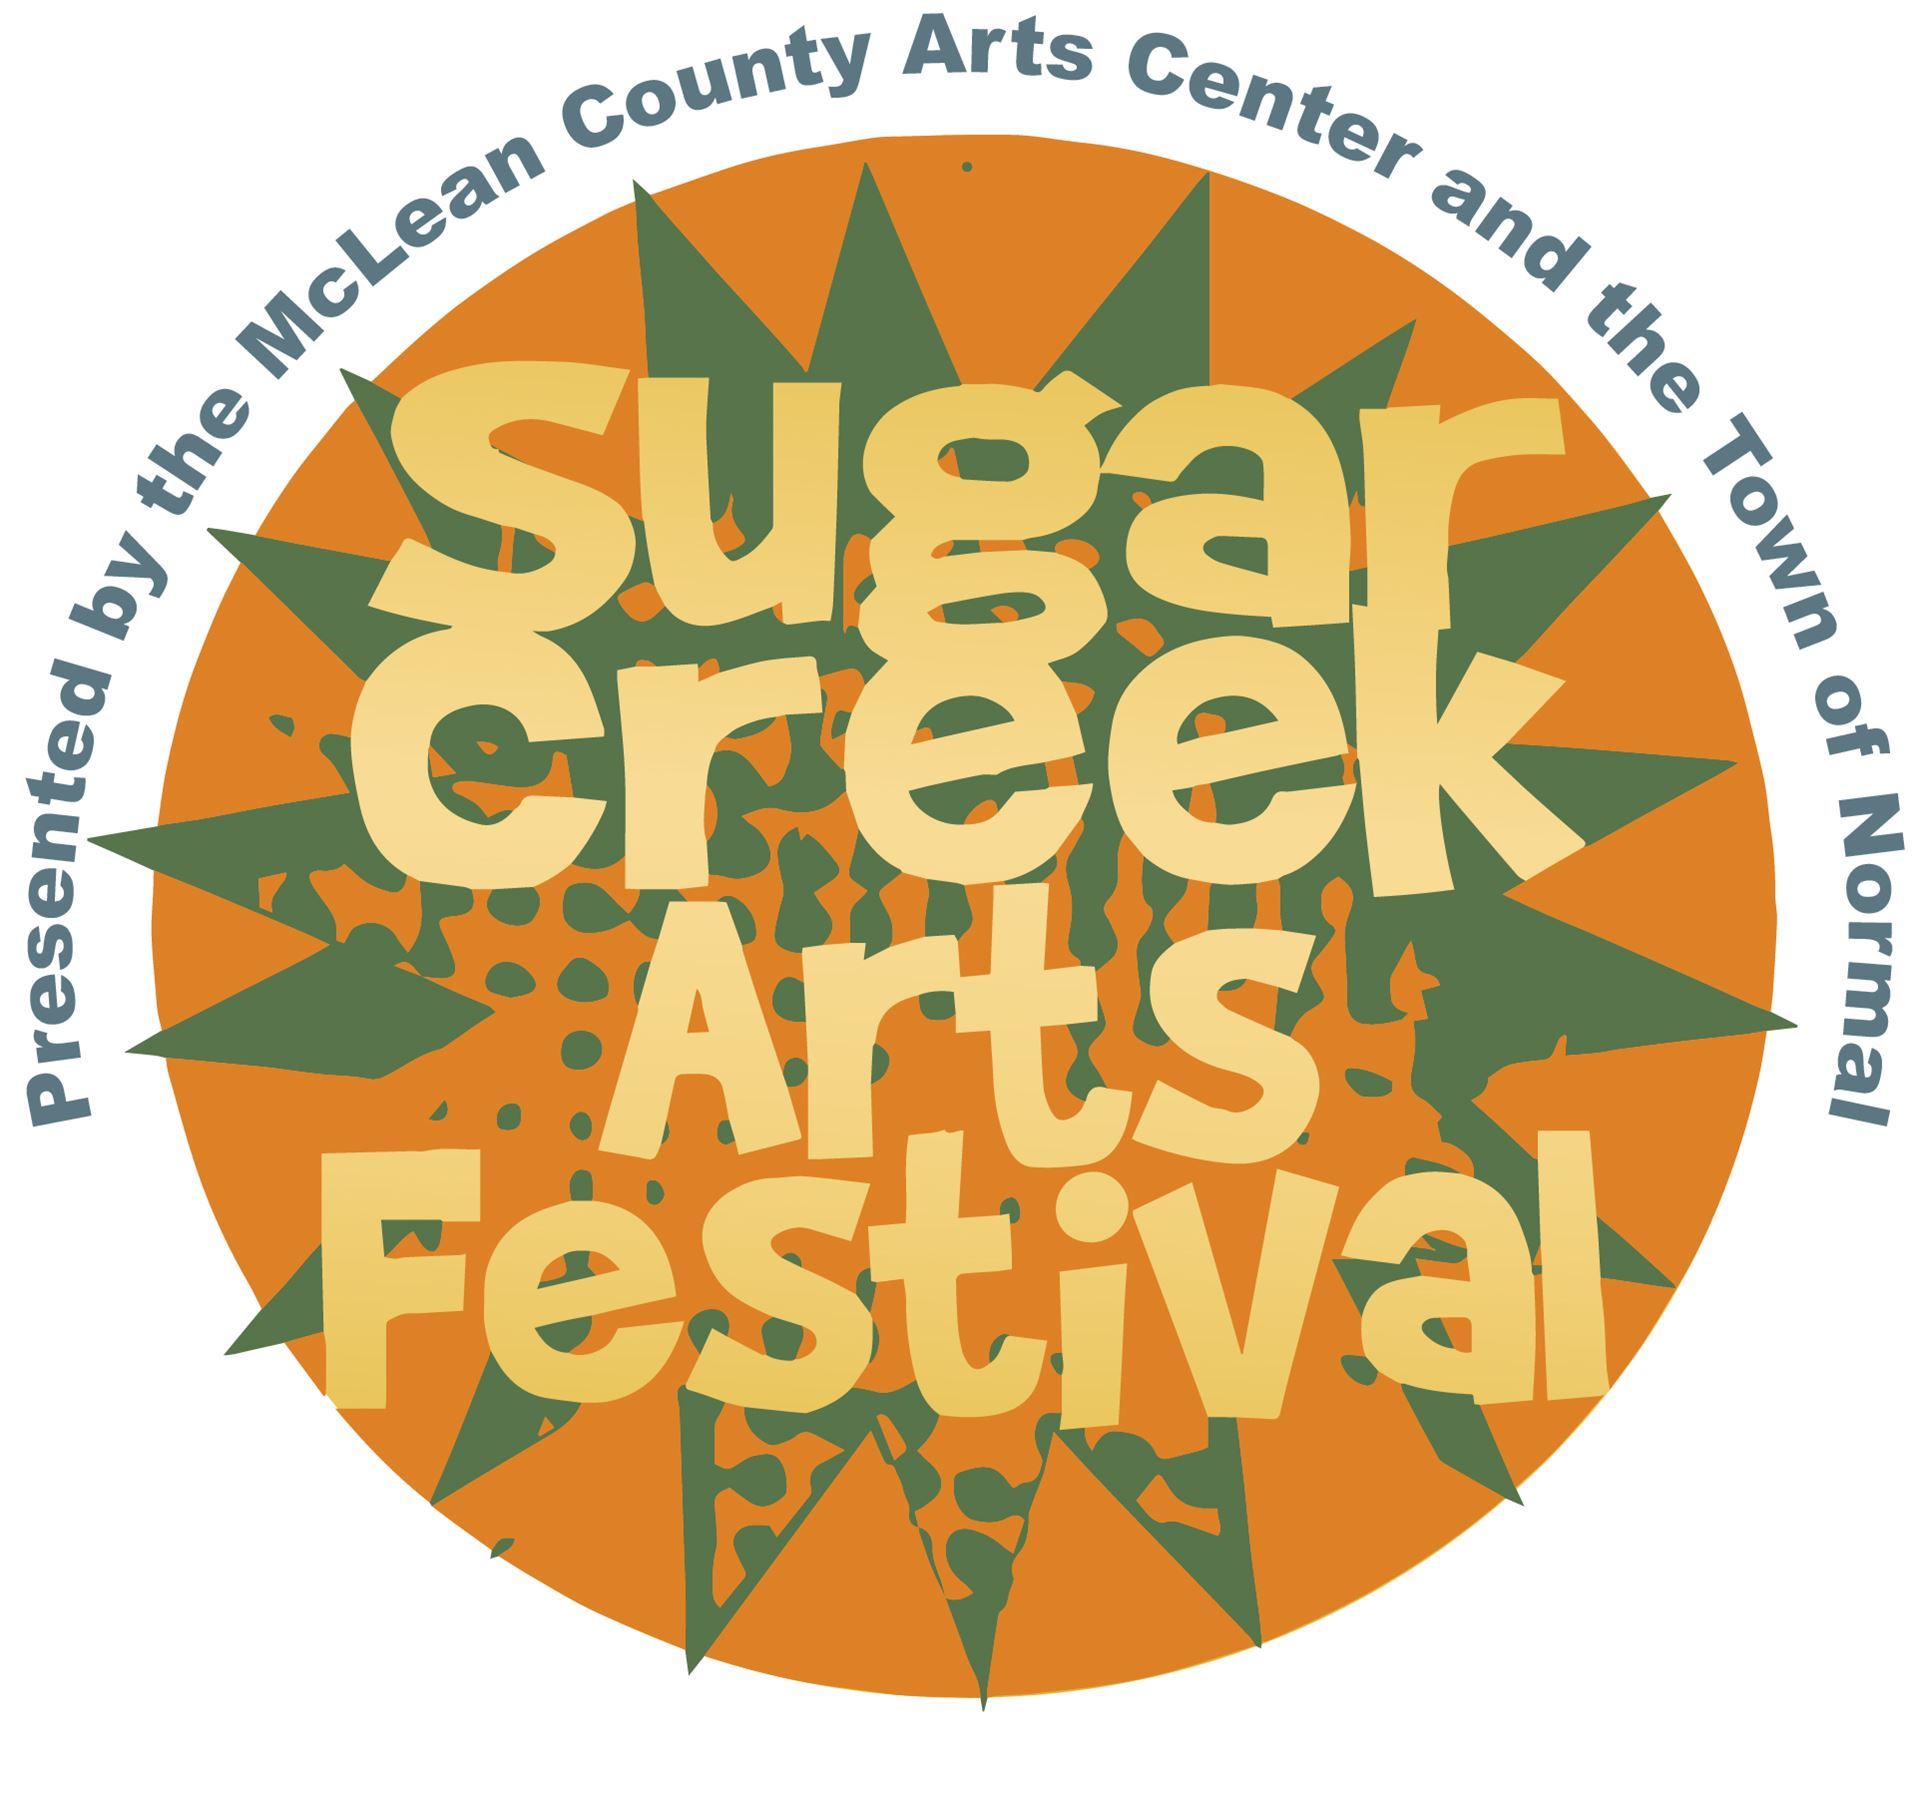 Sugar Creek Arts Festival